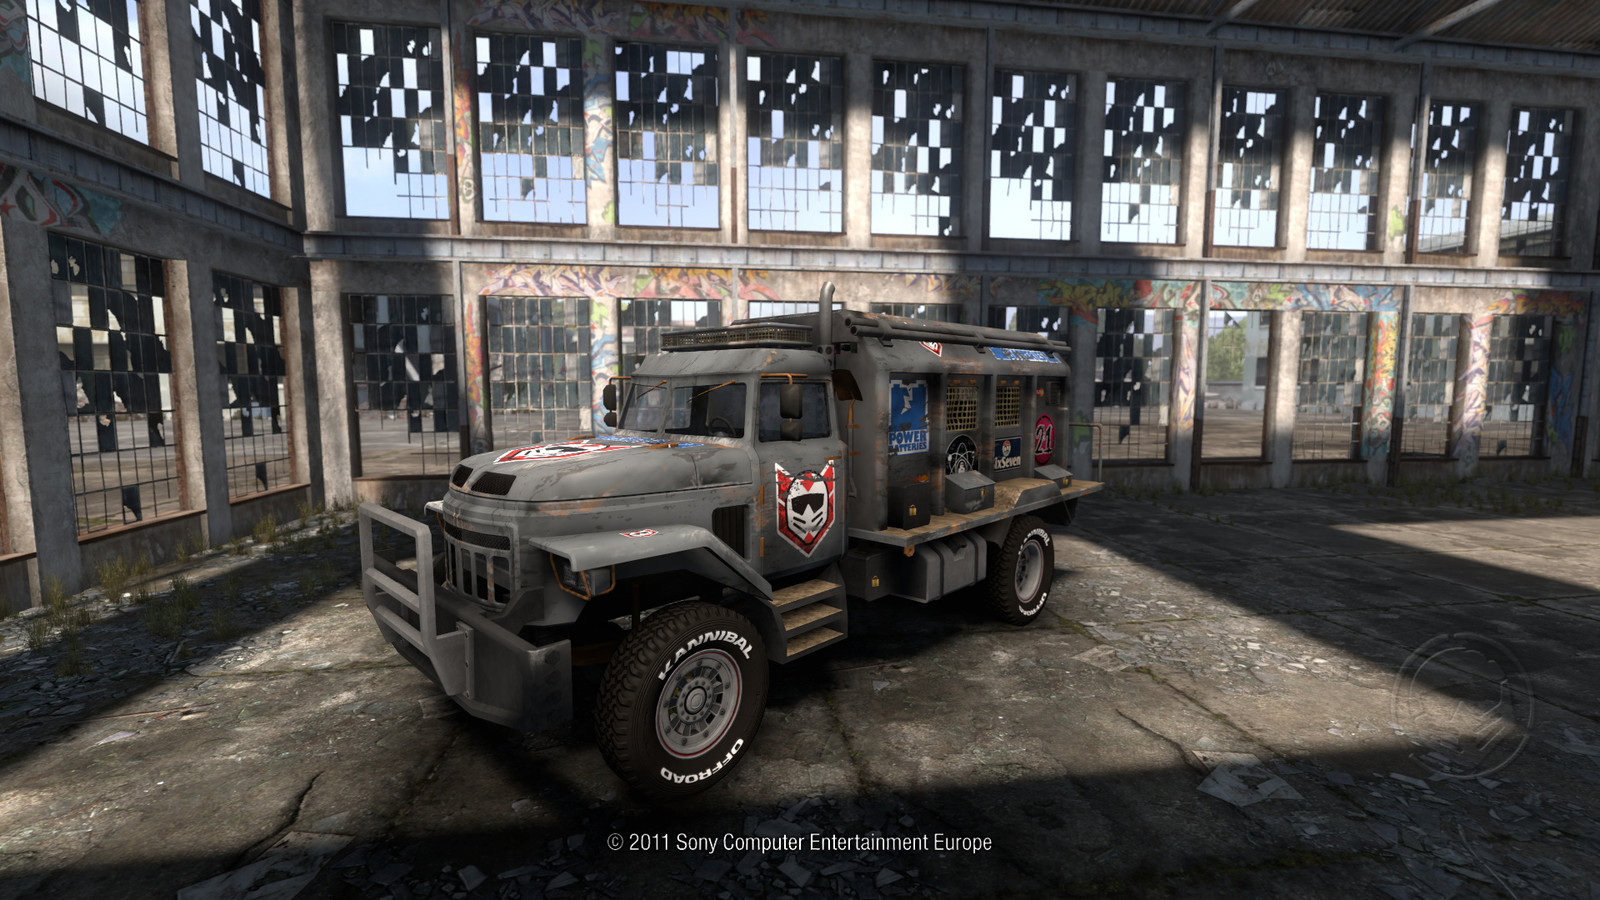 Molotov Shelka
(In-game screenshot)